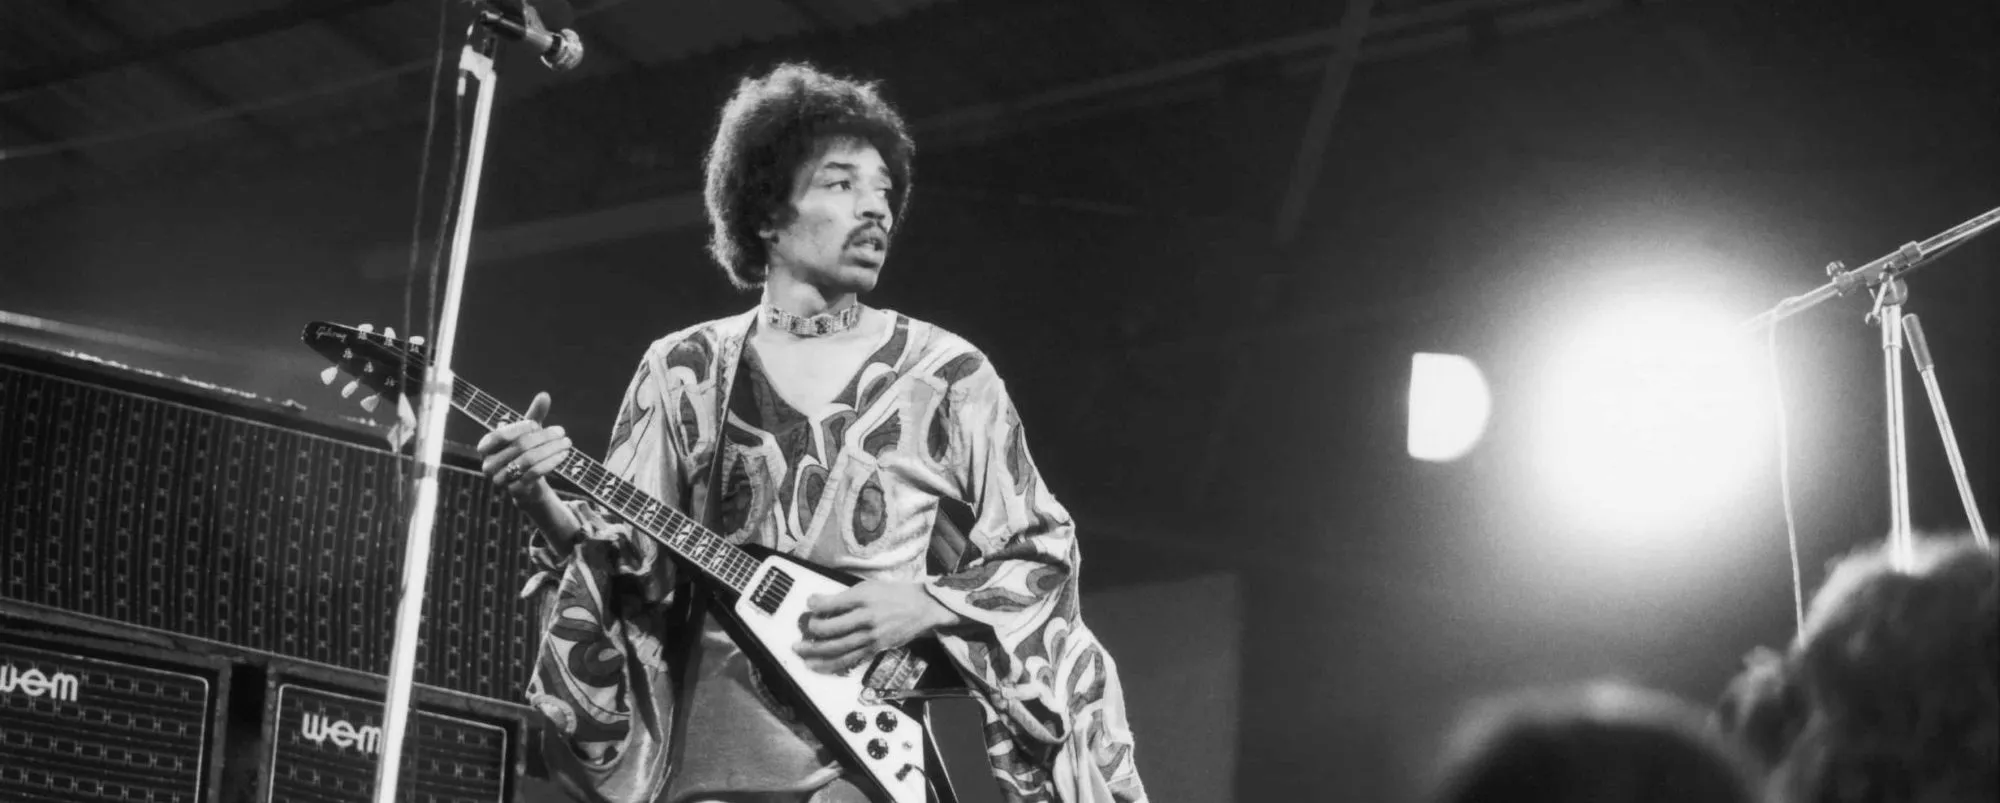 Torn 1967 Lyric Sheet From Jimi Hendrix Put Back Together